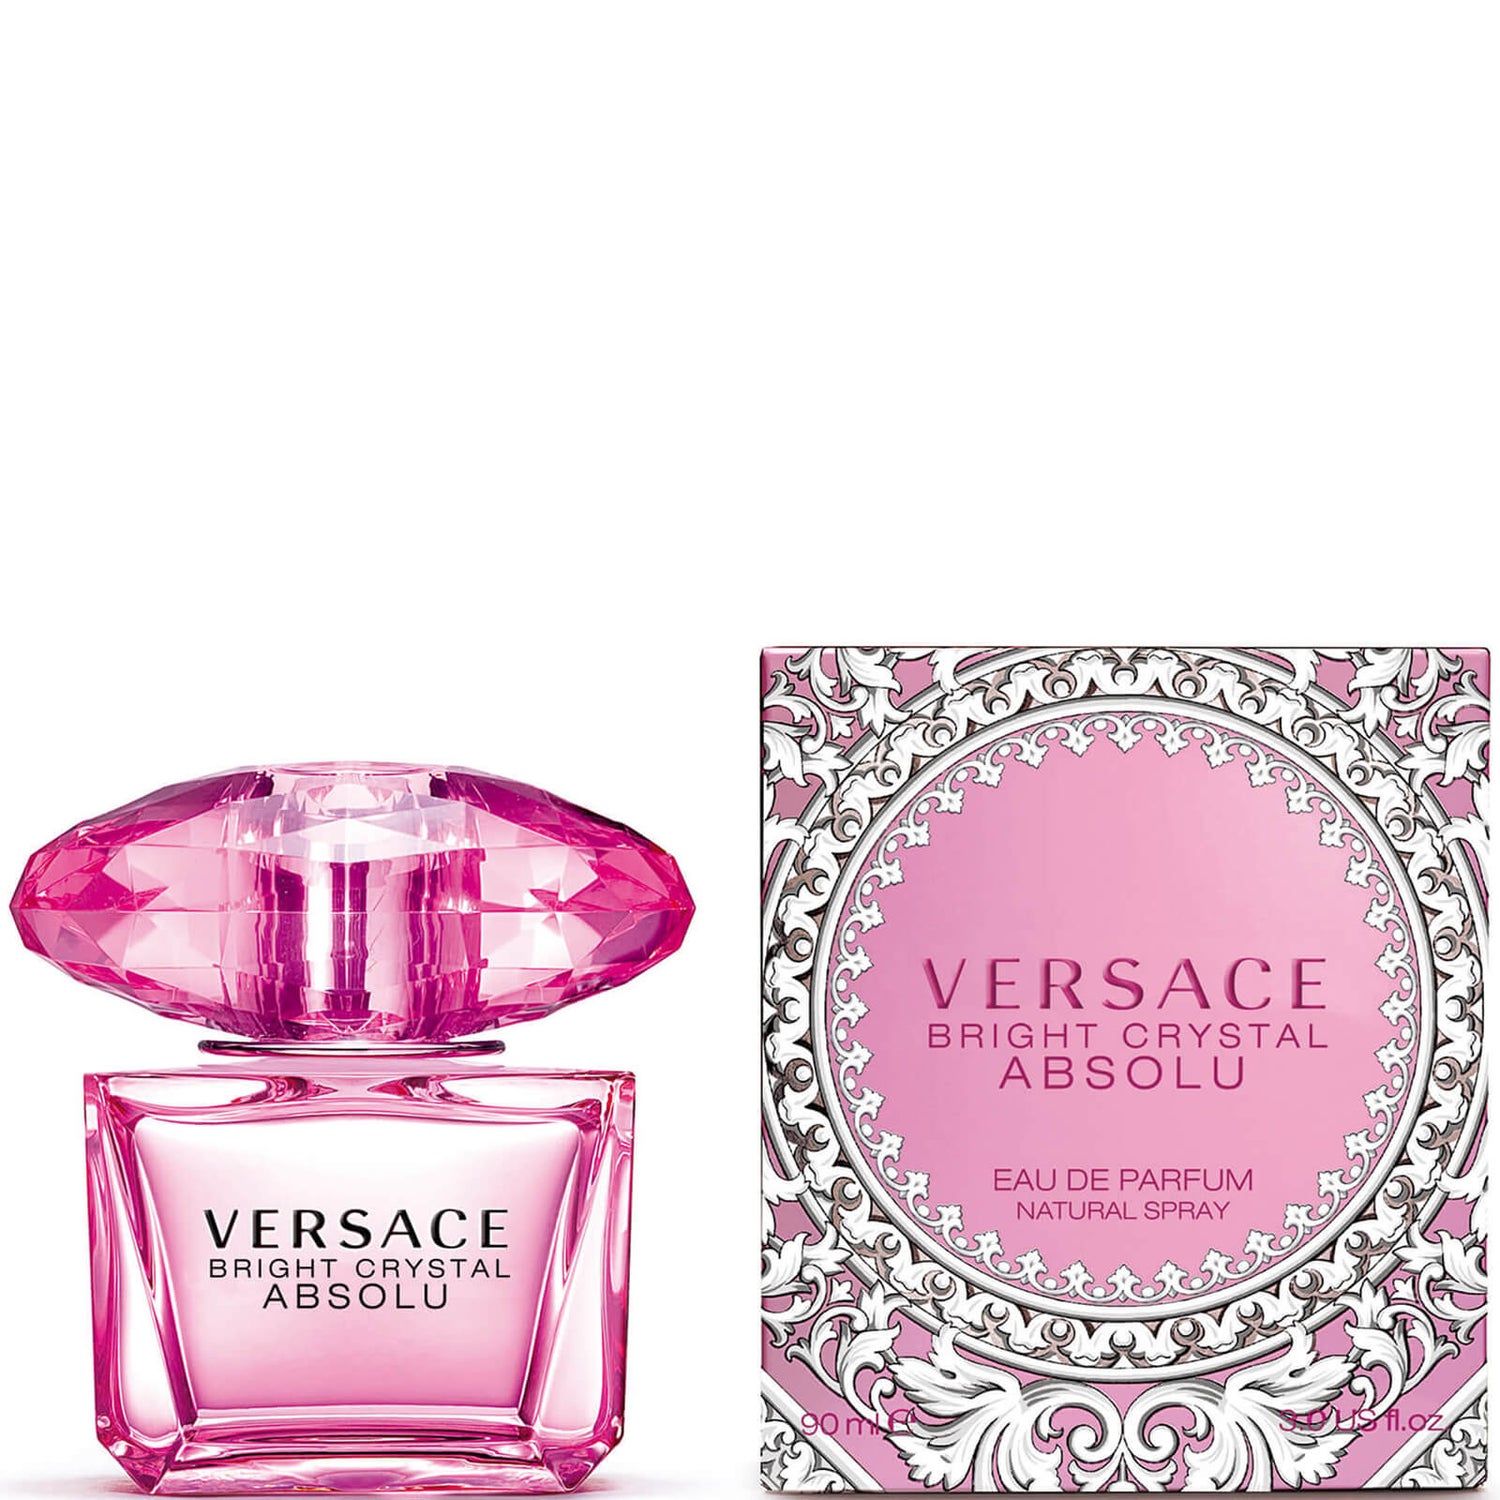 Versace Bright Crystal Absolu Eau de Parfum de 90 ml